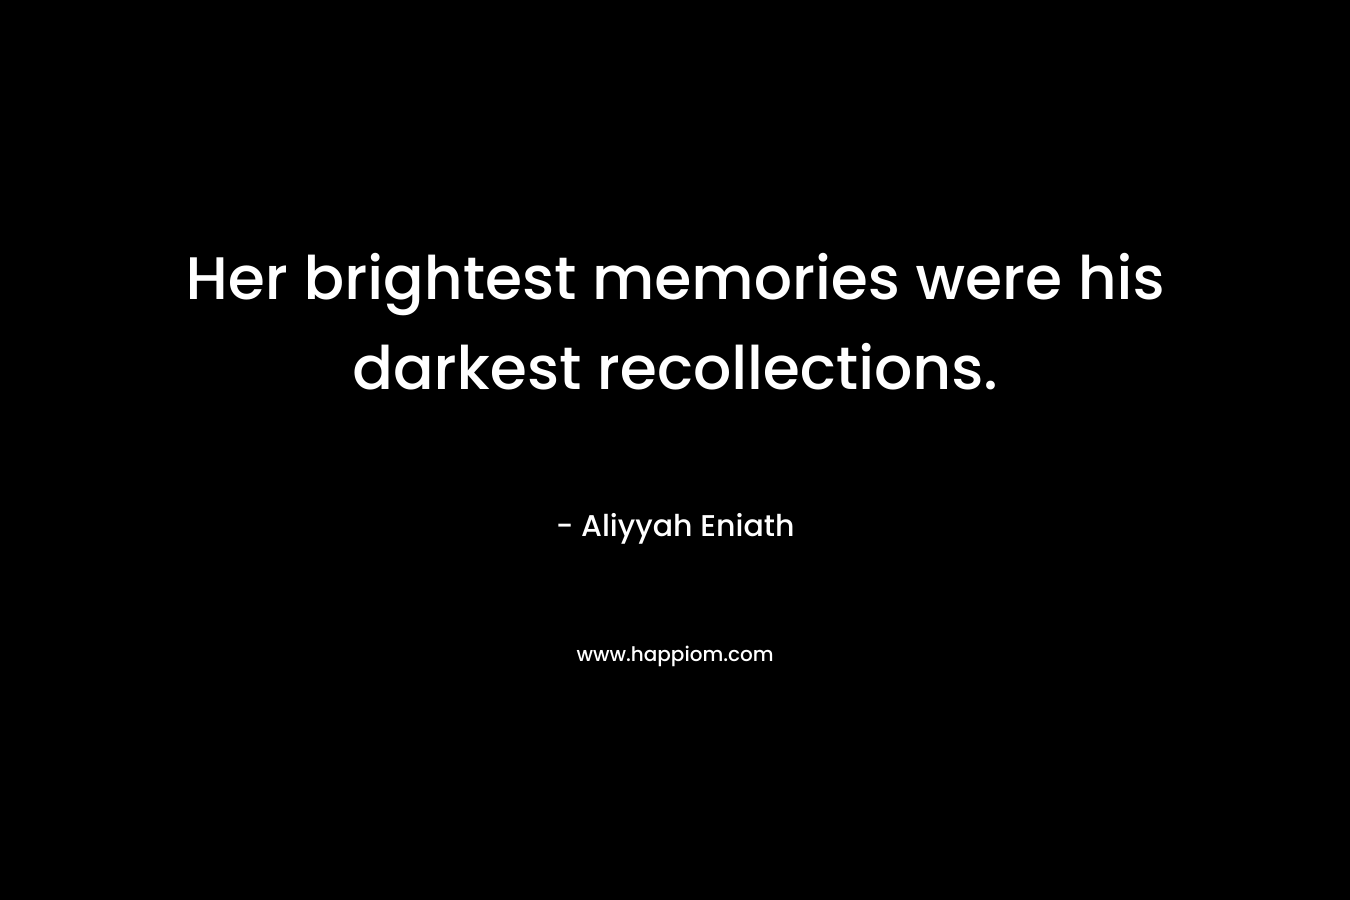 Her brightest memories were his darkest recollections.